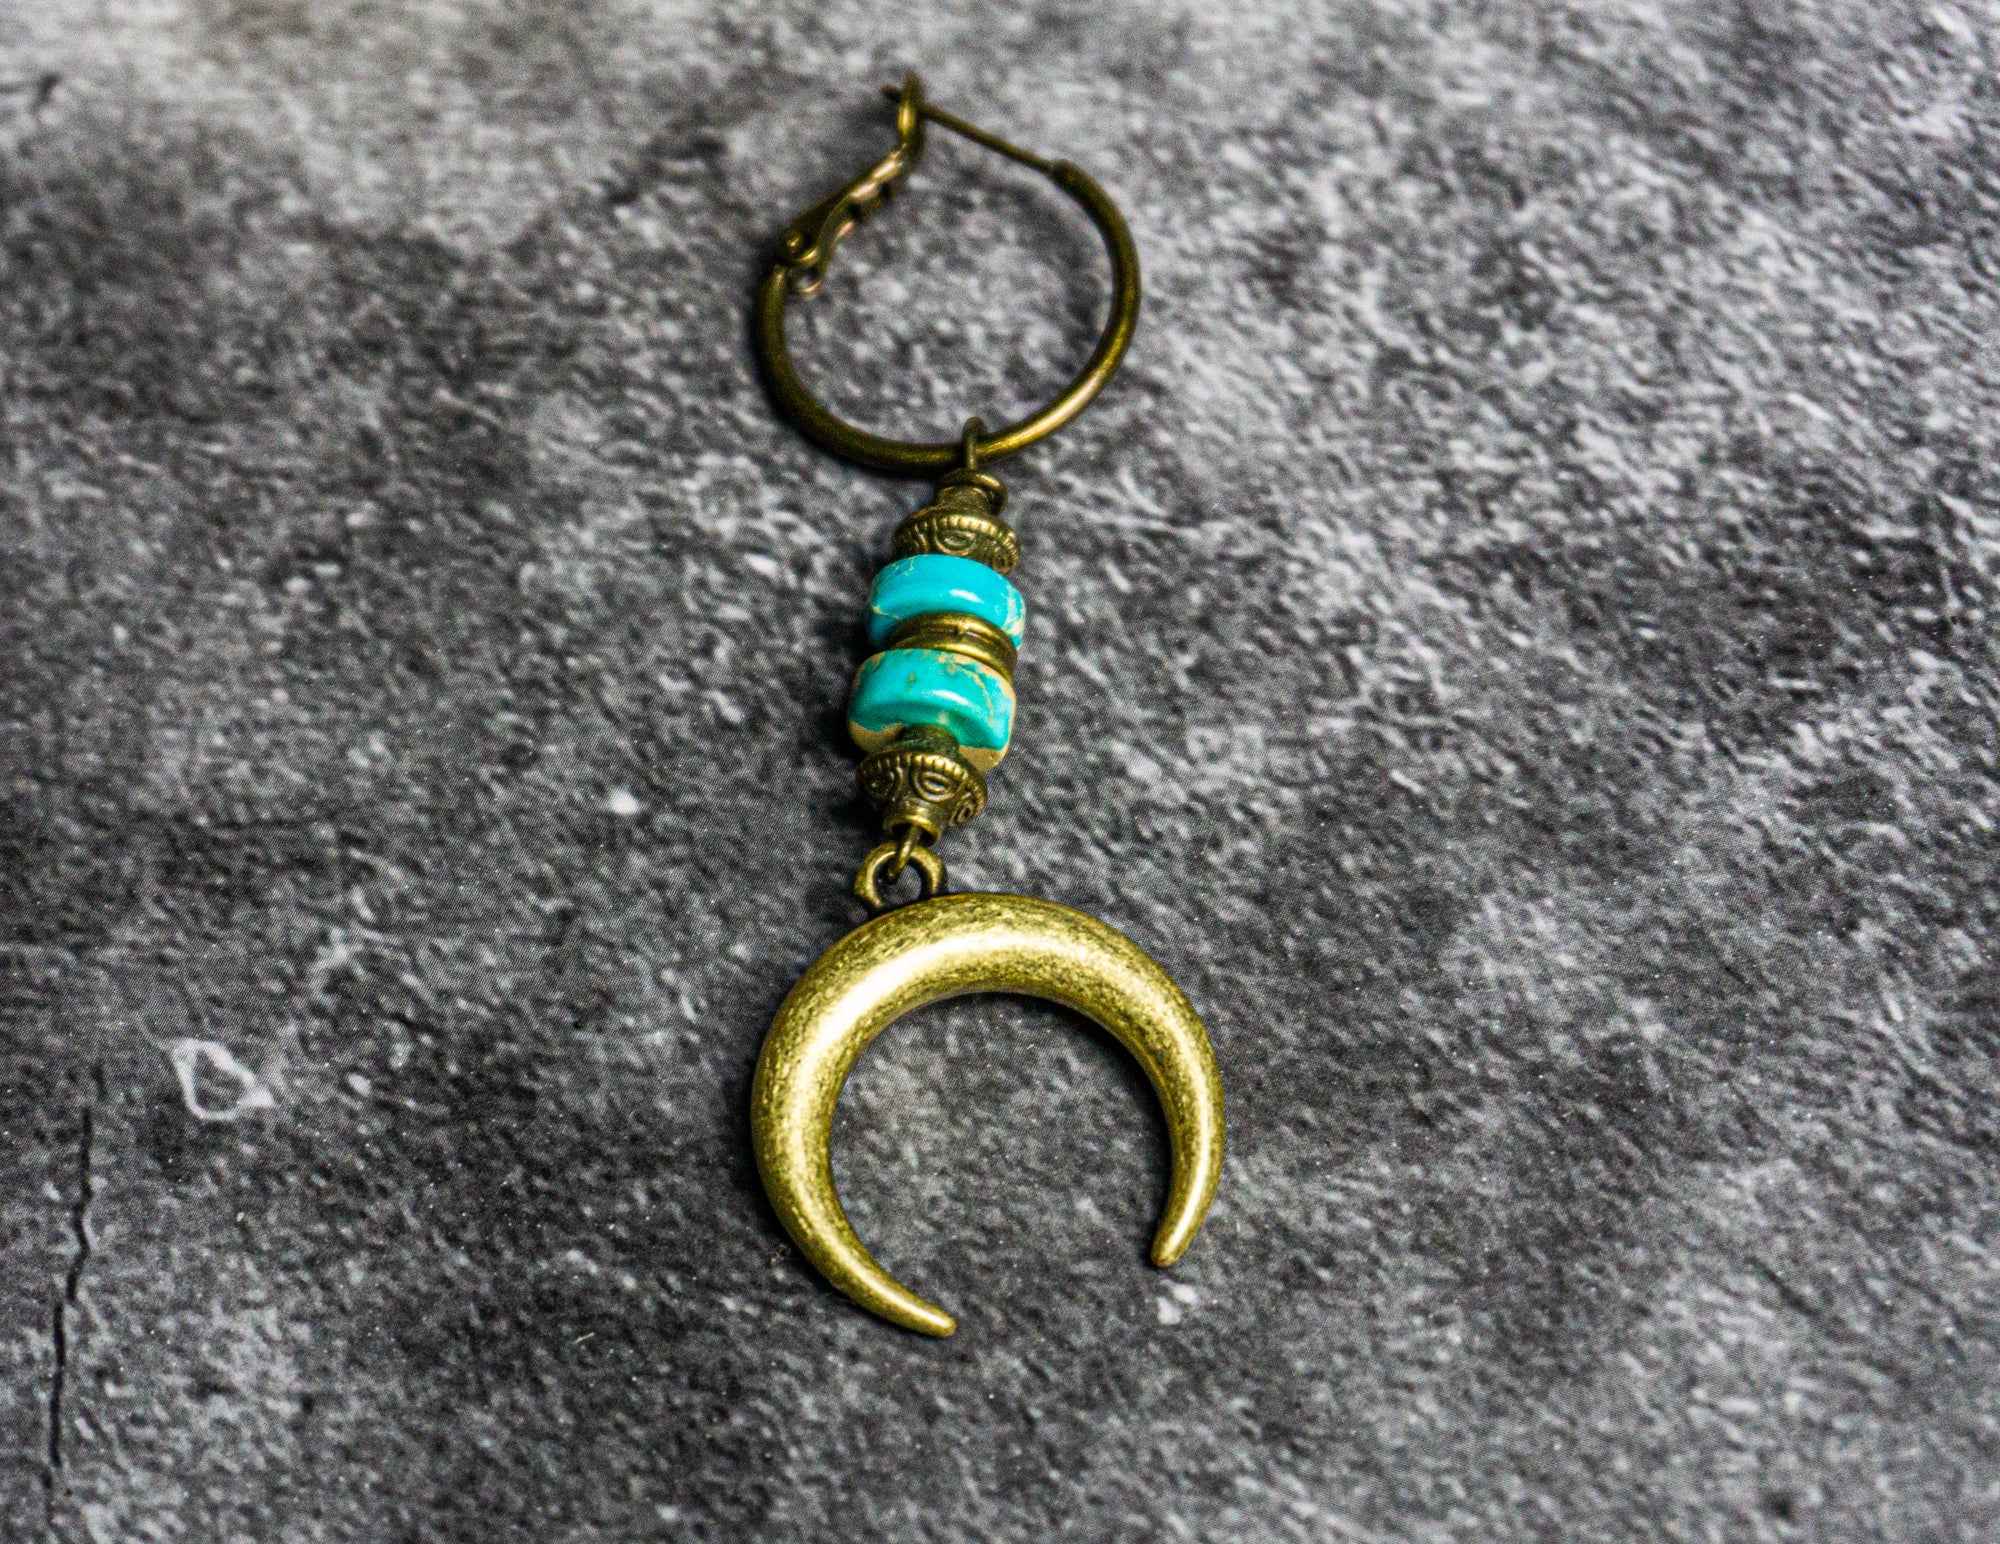 bronze hoop earring wit turquise gemstones and a crescent moon dangle charm- wander jewellery